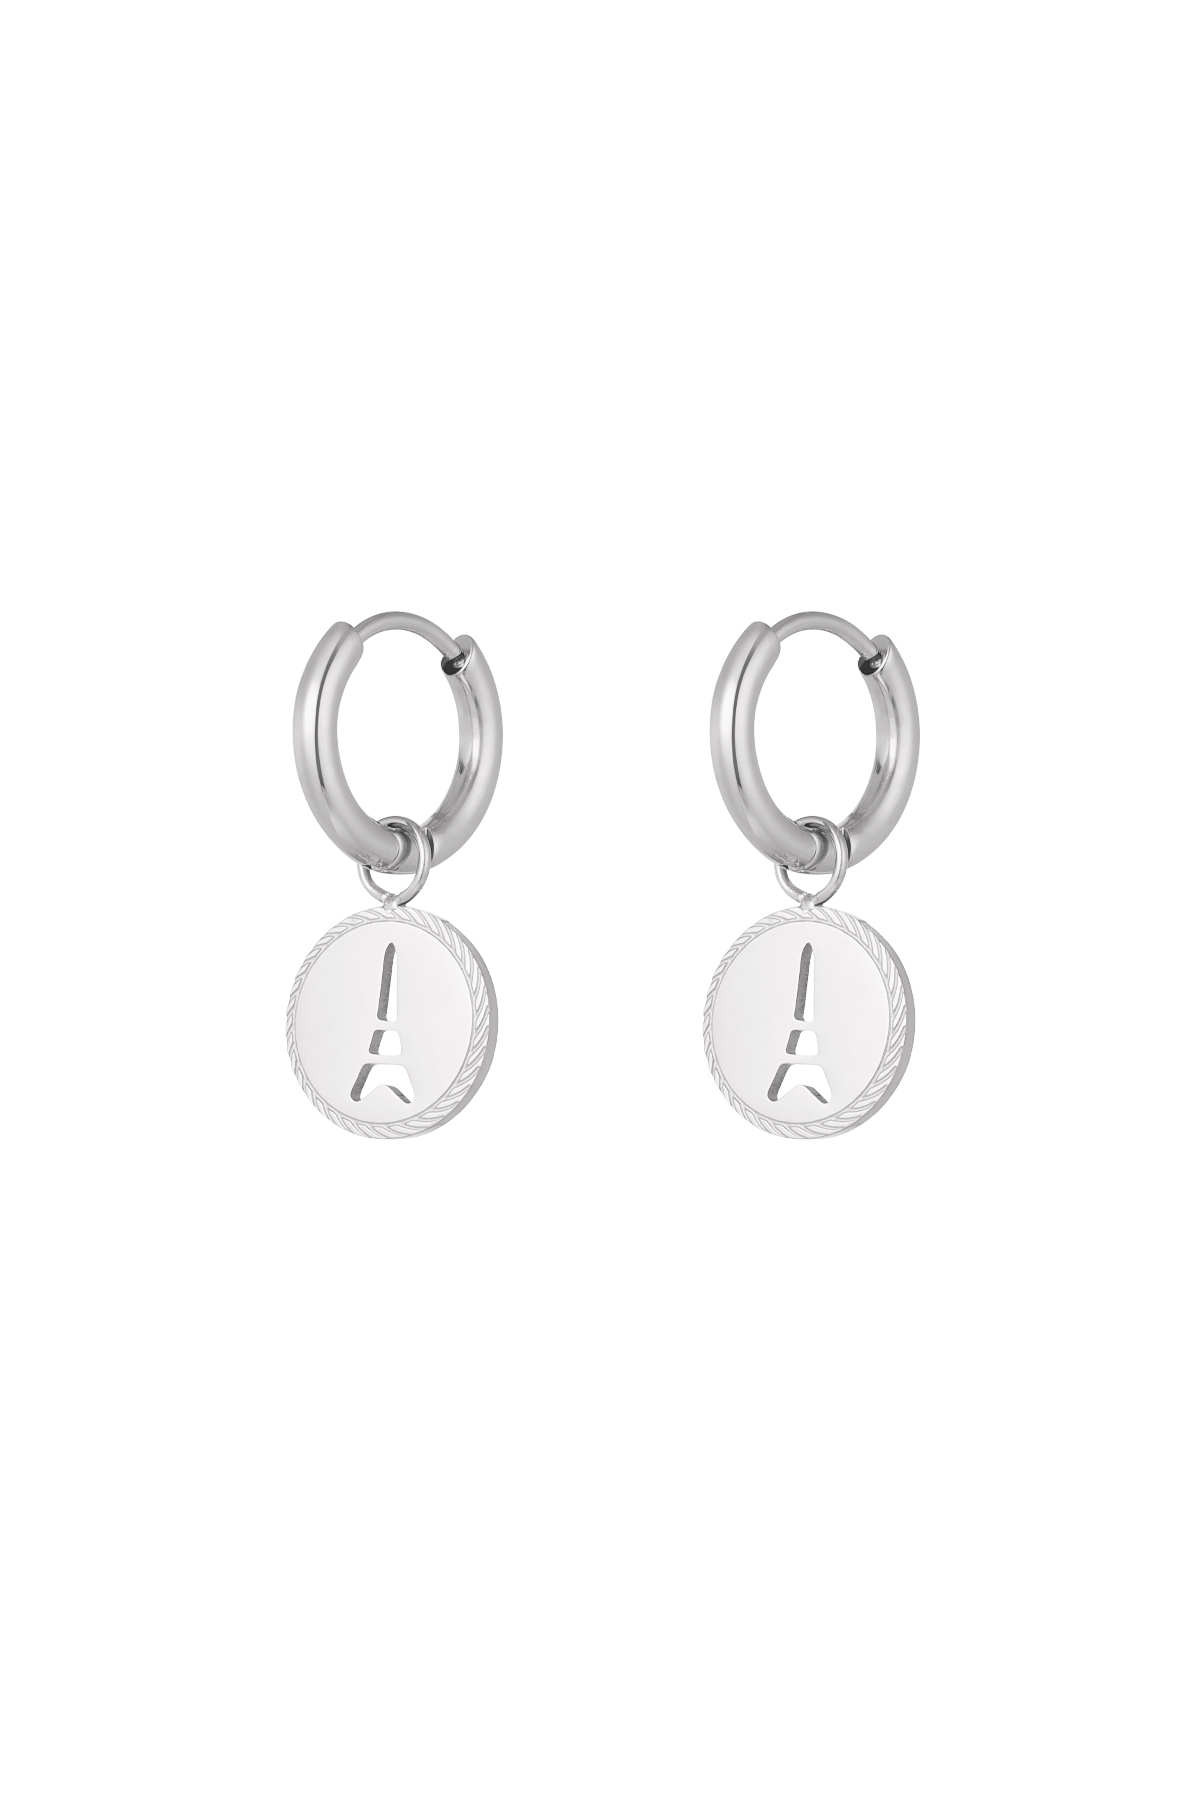 Eiffel Tower coin earrings - silver h5 